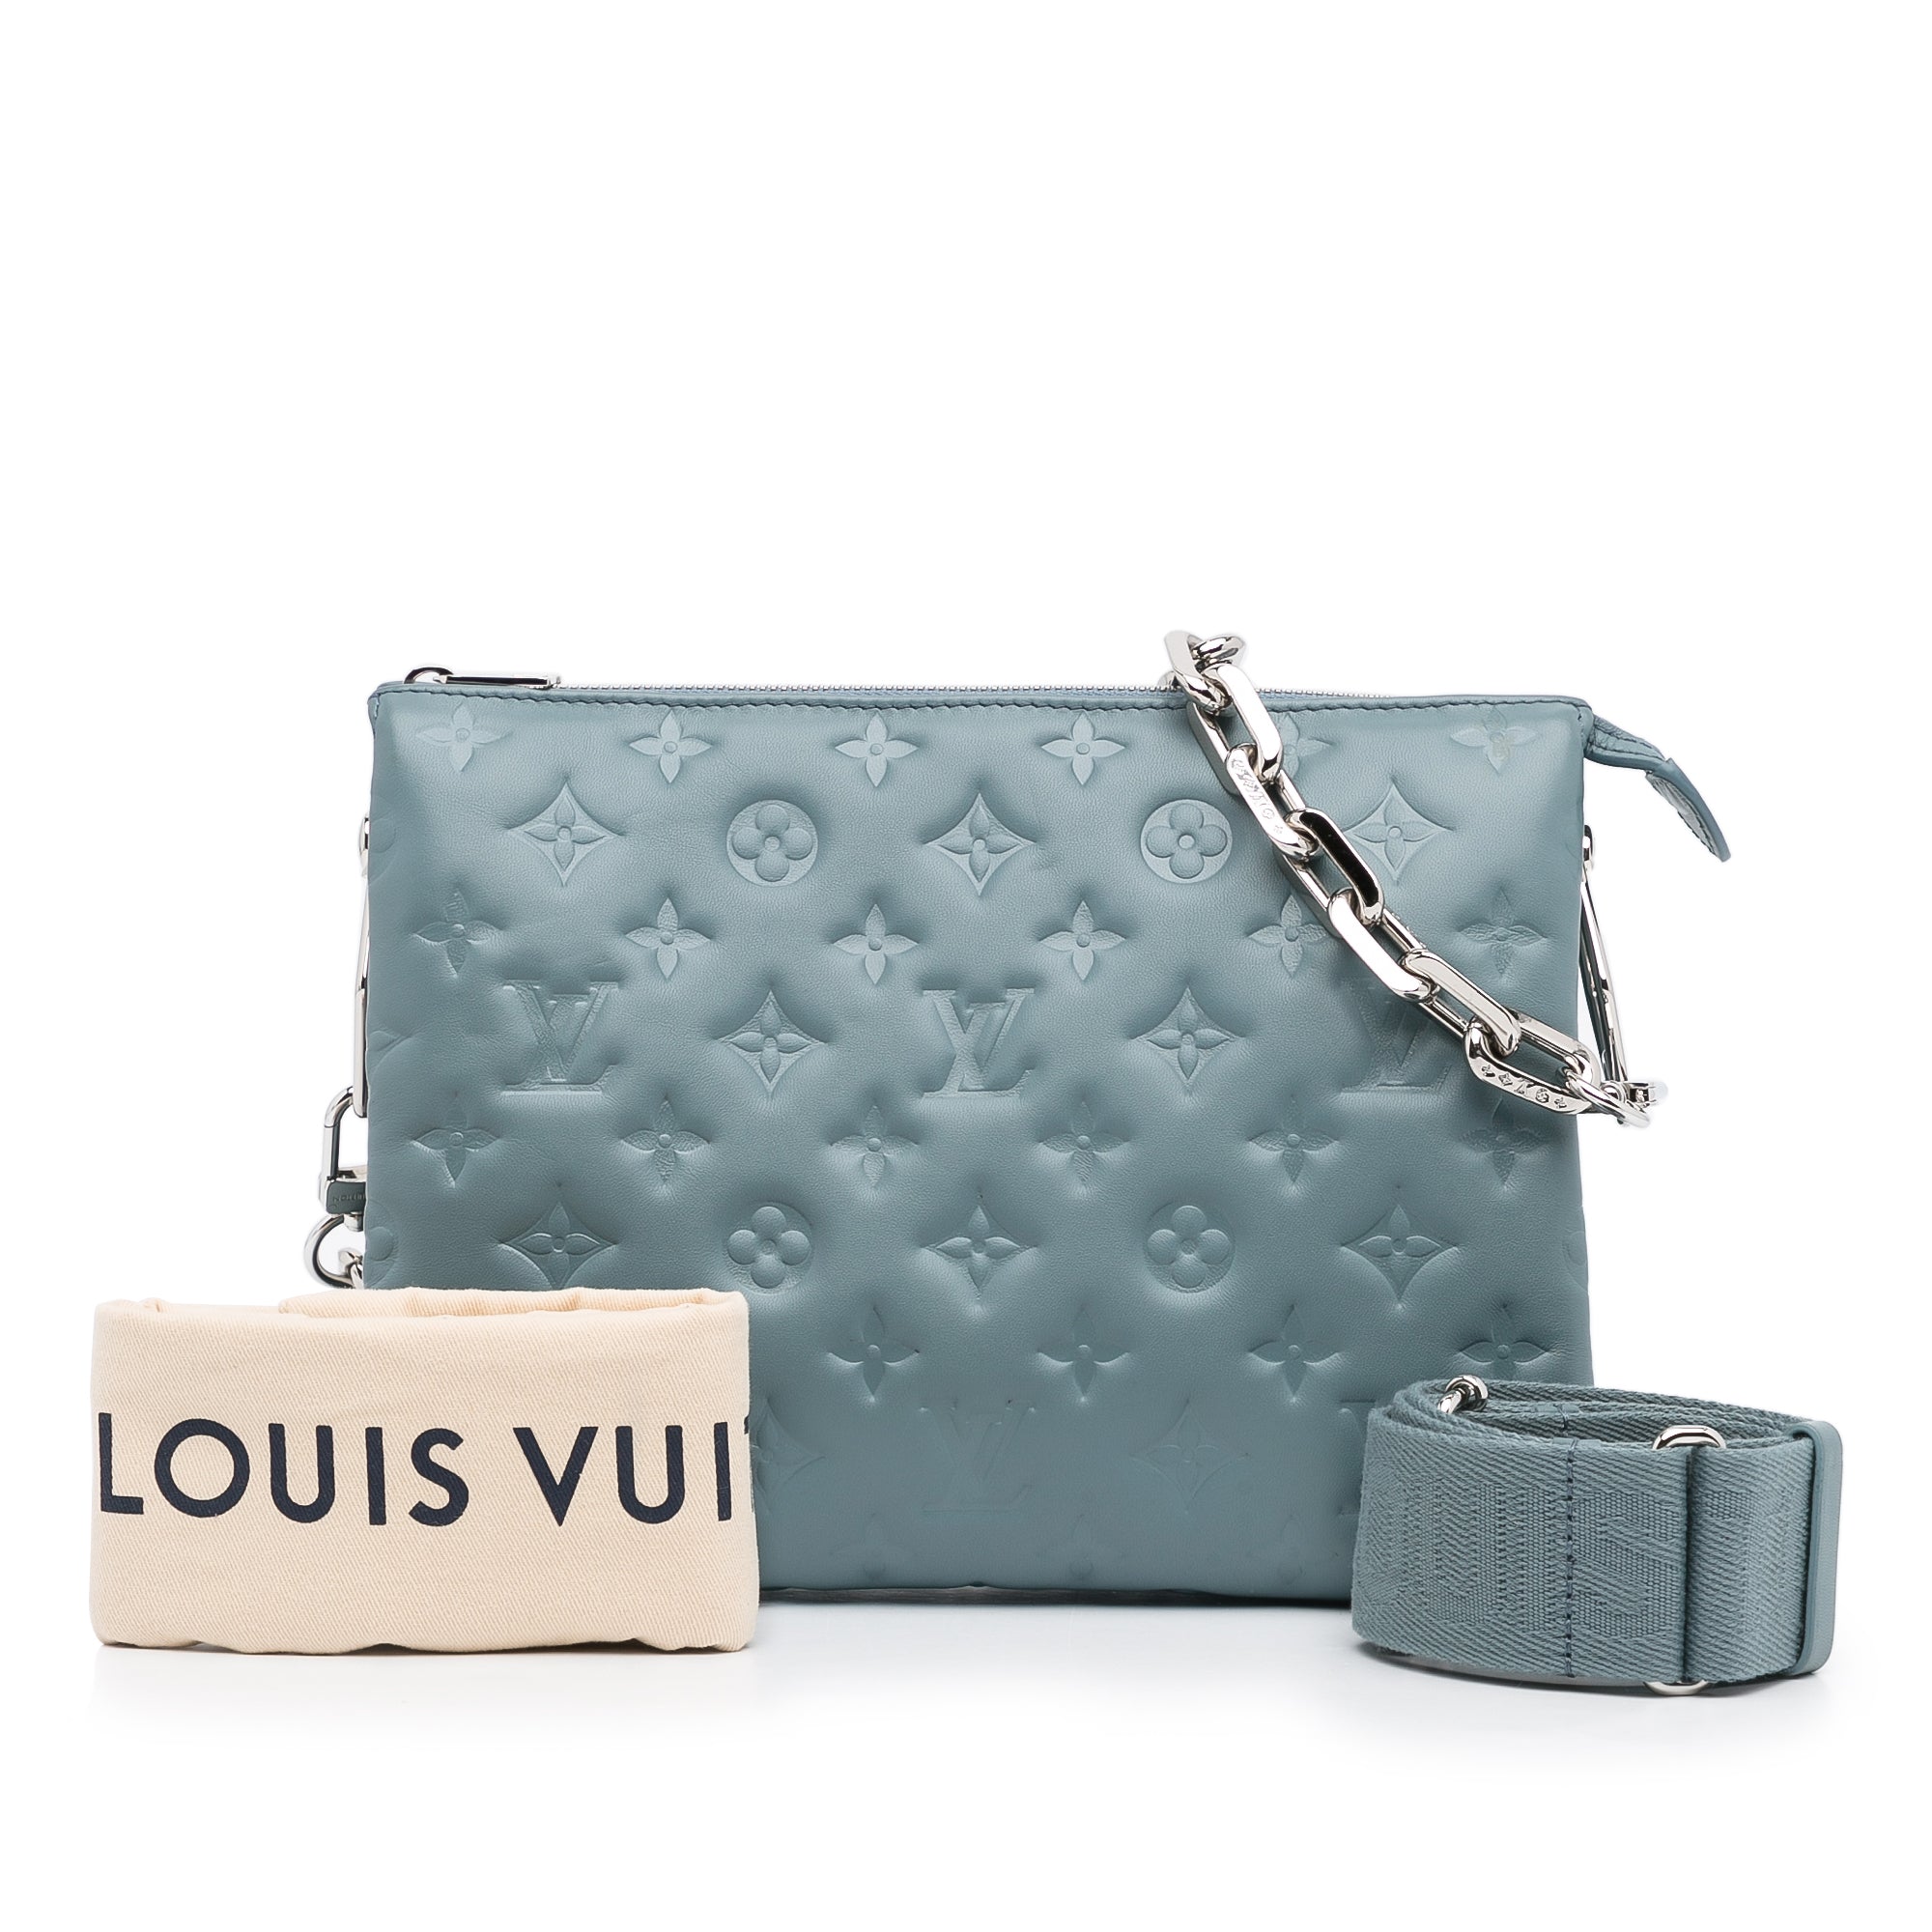 Louis Vuitton Coussin MM vs. PM - der Vergleich / Unterschiede